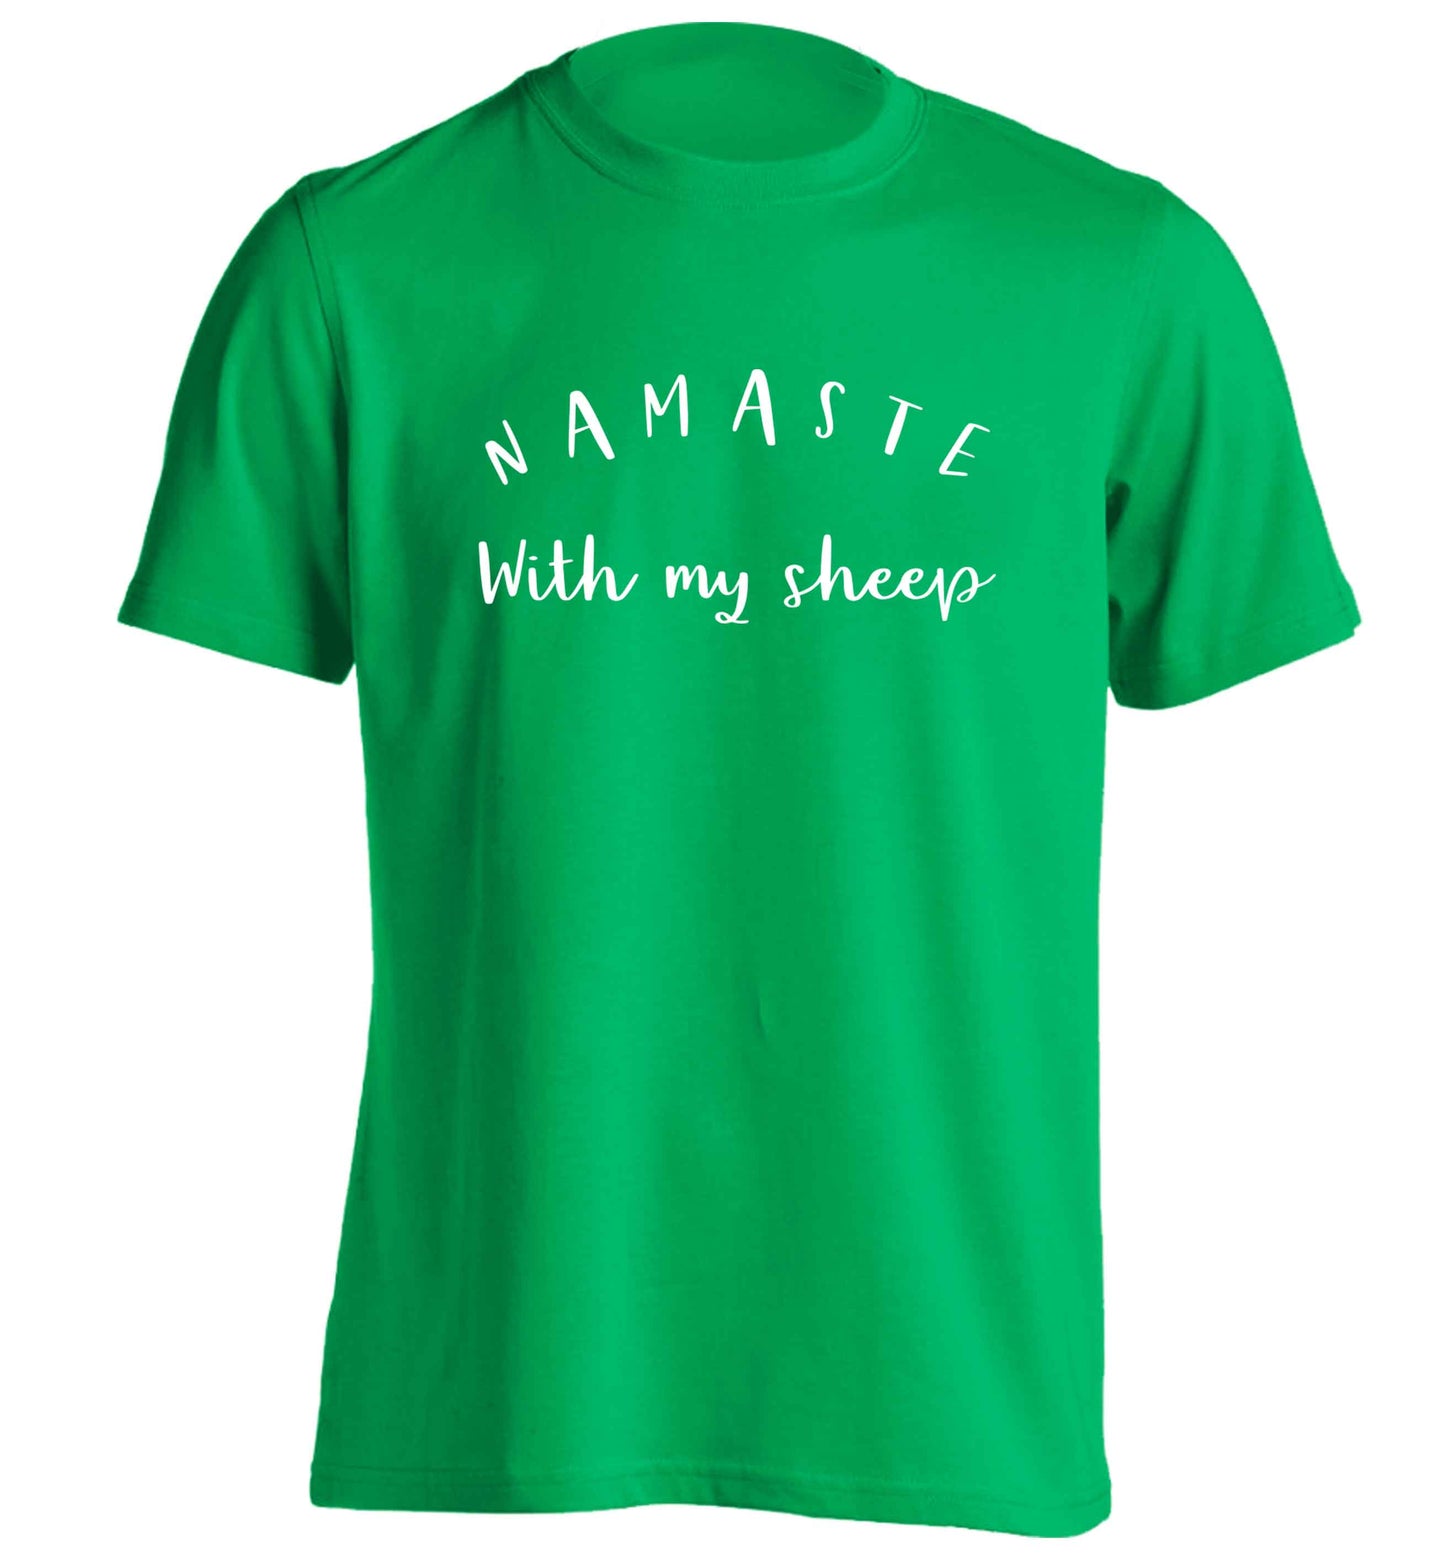 Namaste with my sheep adults unisex green Tshirt 2XL